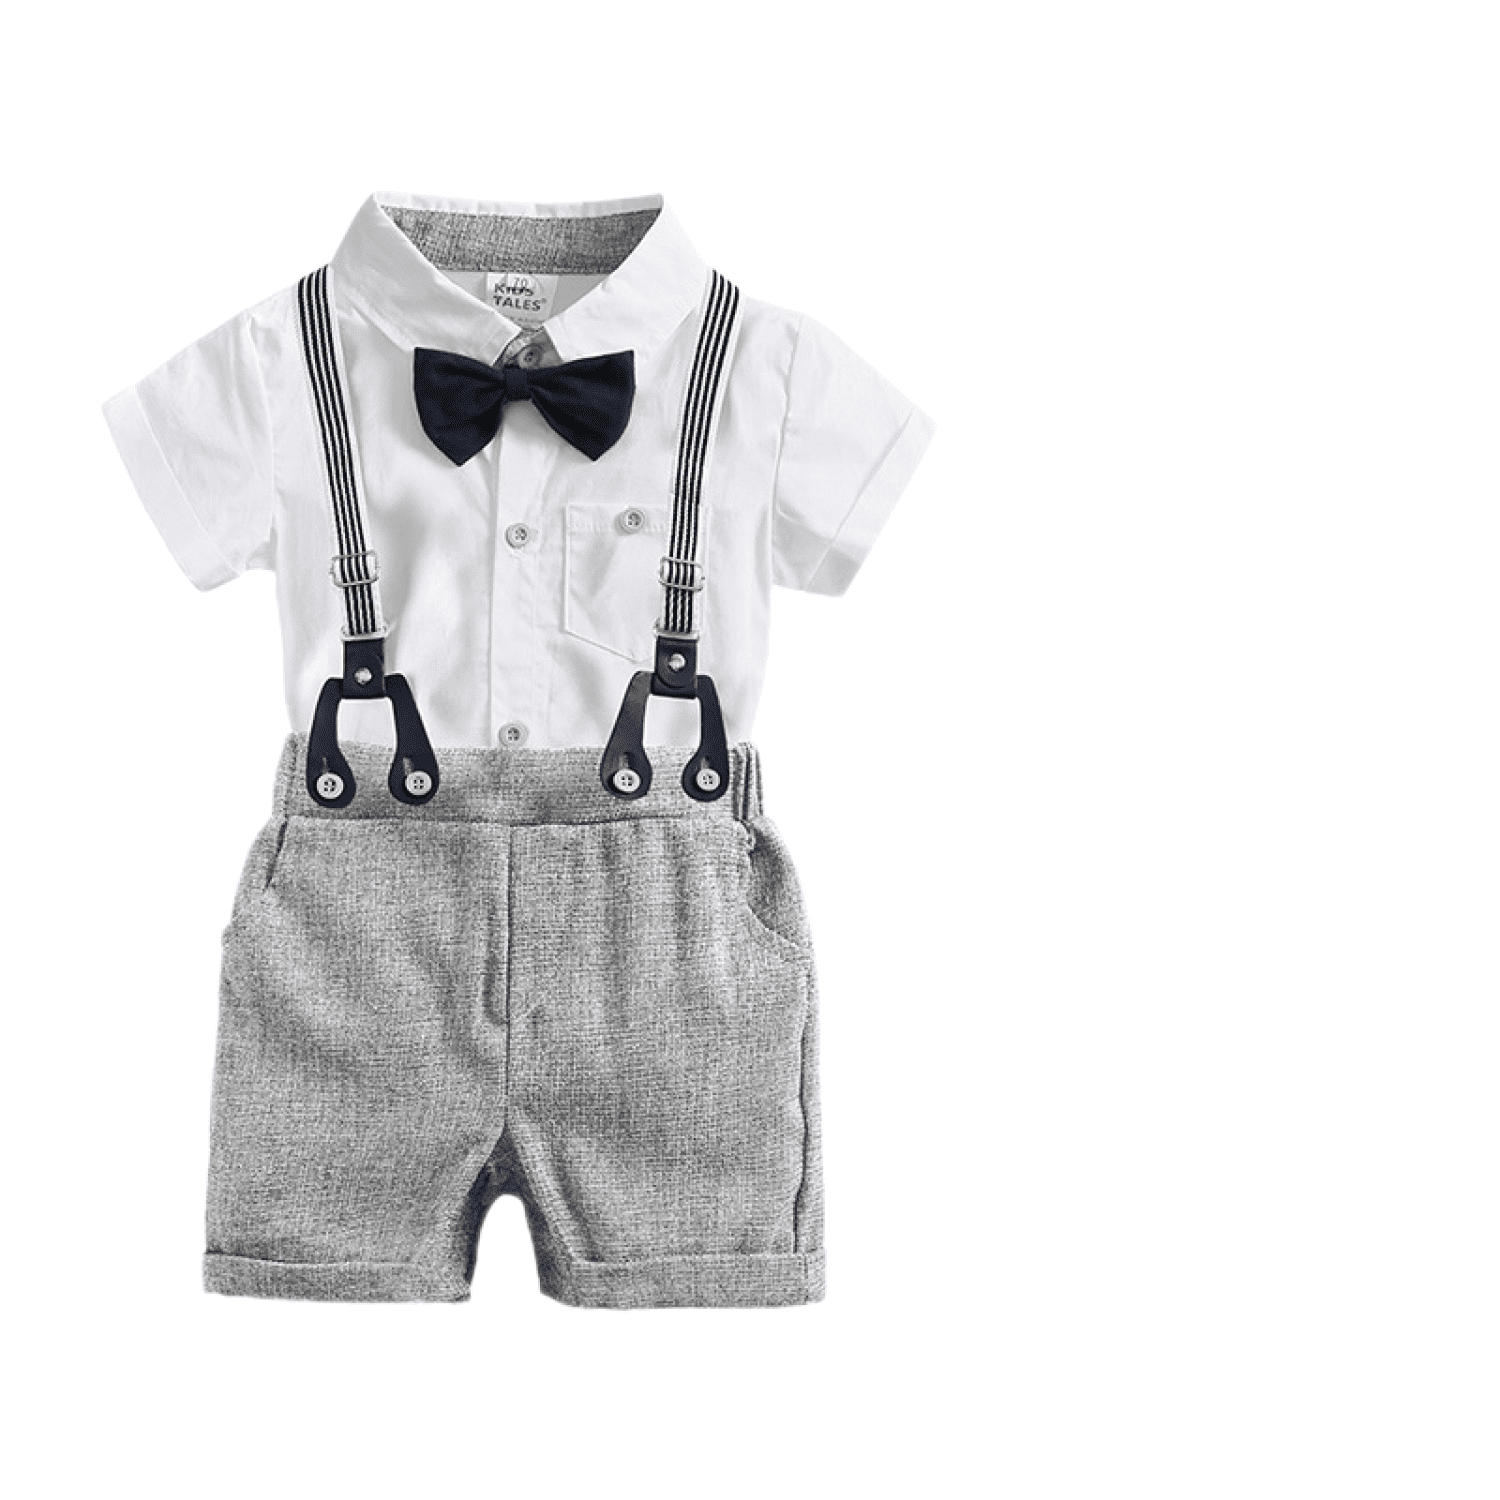 Newborn Baby Boys Gentleman Outfit Romper Shirt Suspender Shorts Toddler Clothes 